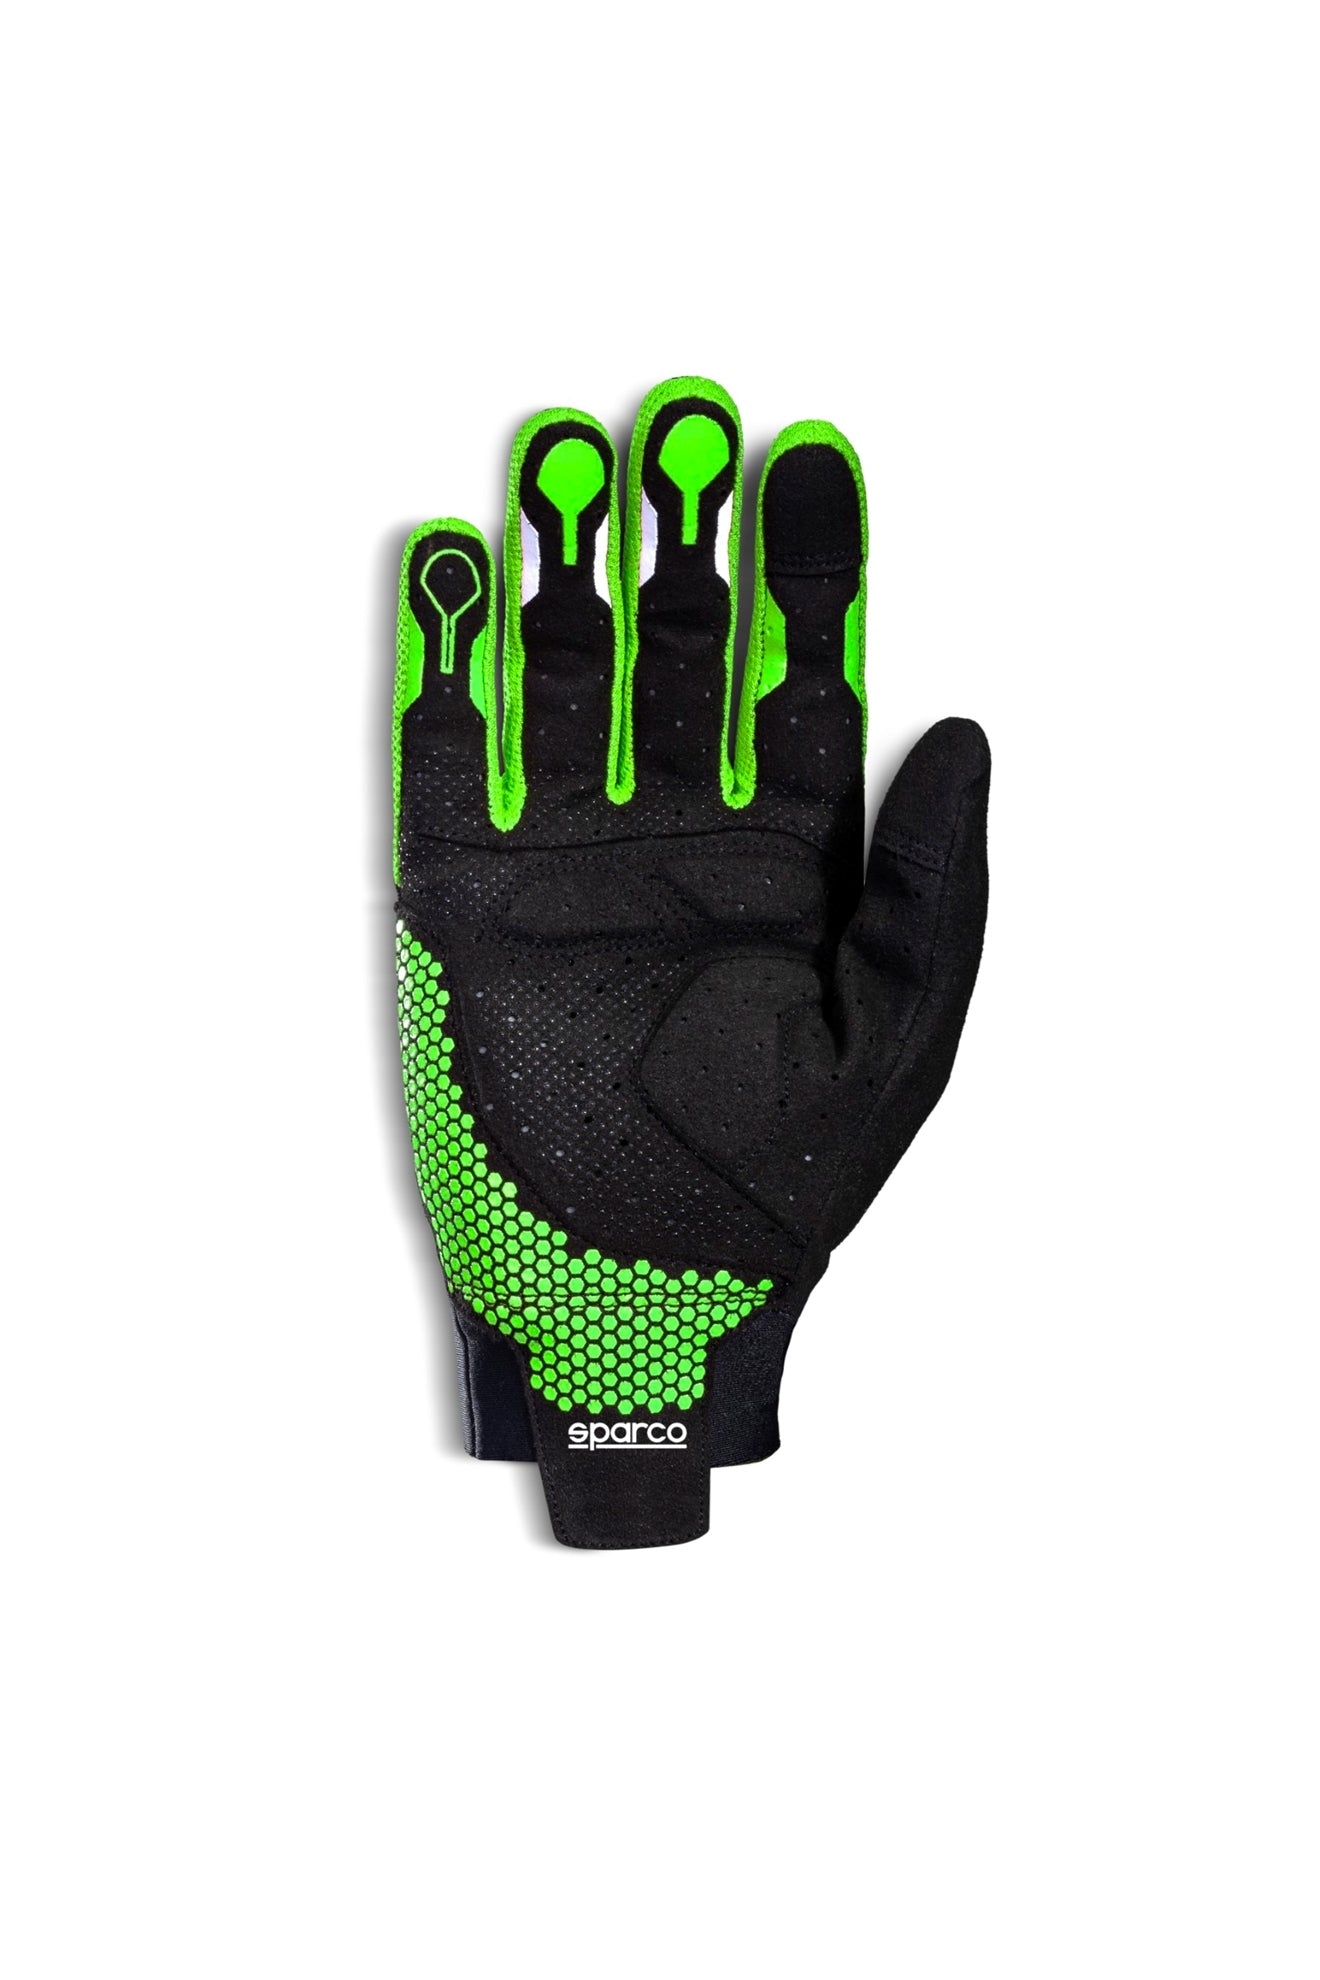 Sparco Hypergrip+ Sim Racing Gloves – simhour